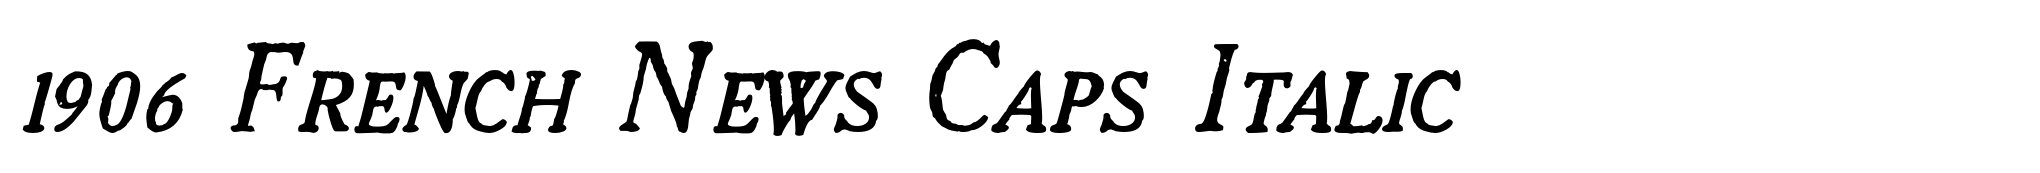 1906 French News Caps Italic image